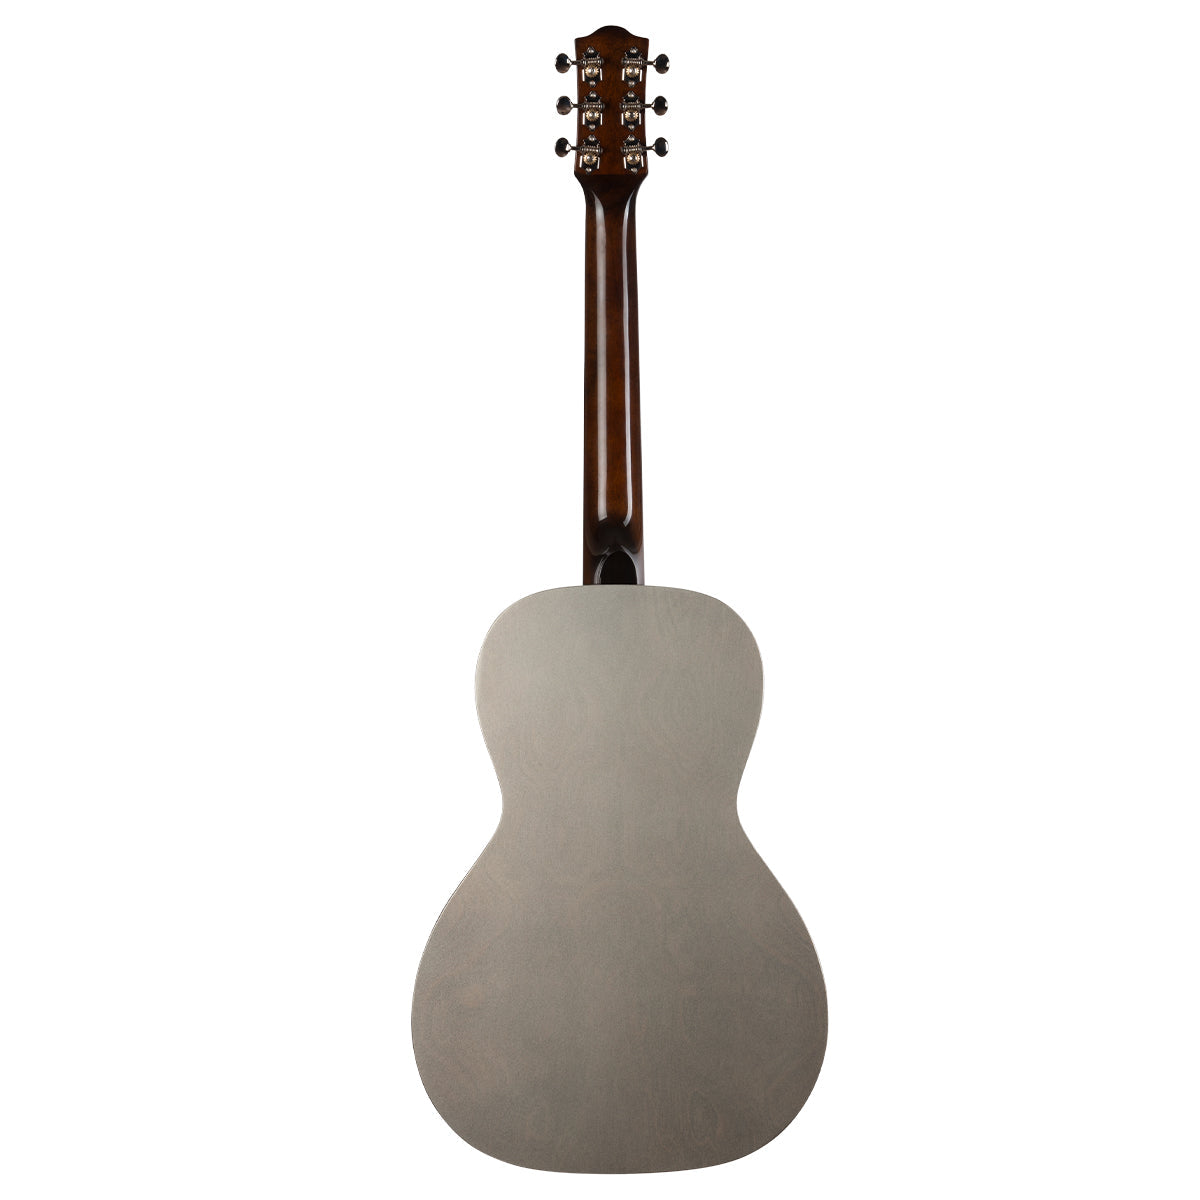 Godin Rialto JR HG Q-Discrete Electro-Acoustic Guitar with Bag ~ Satina Grey, Acoustic Guitar for sale at Richards Guitars.